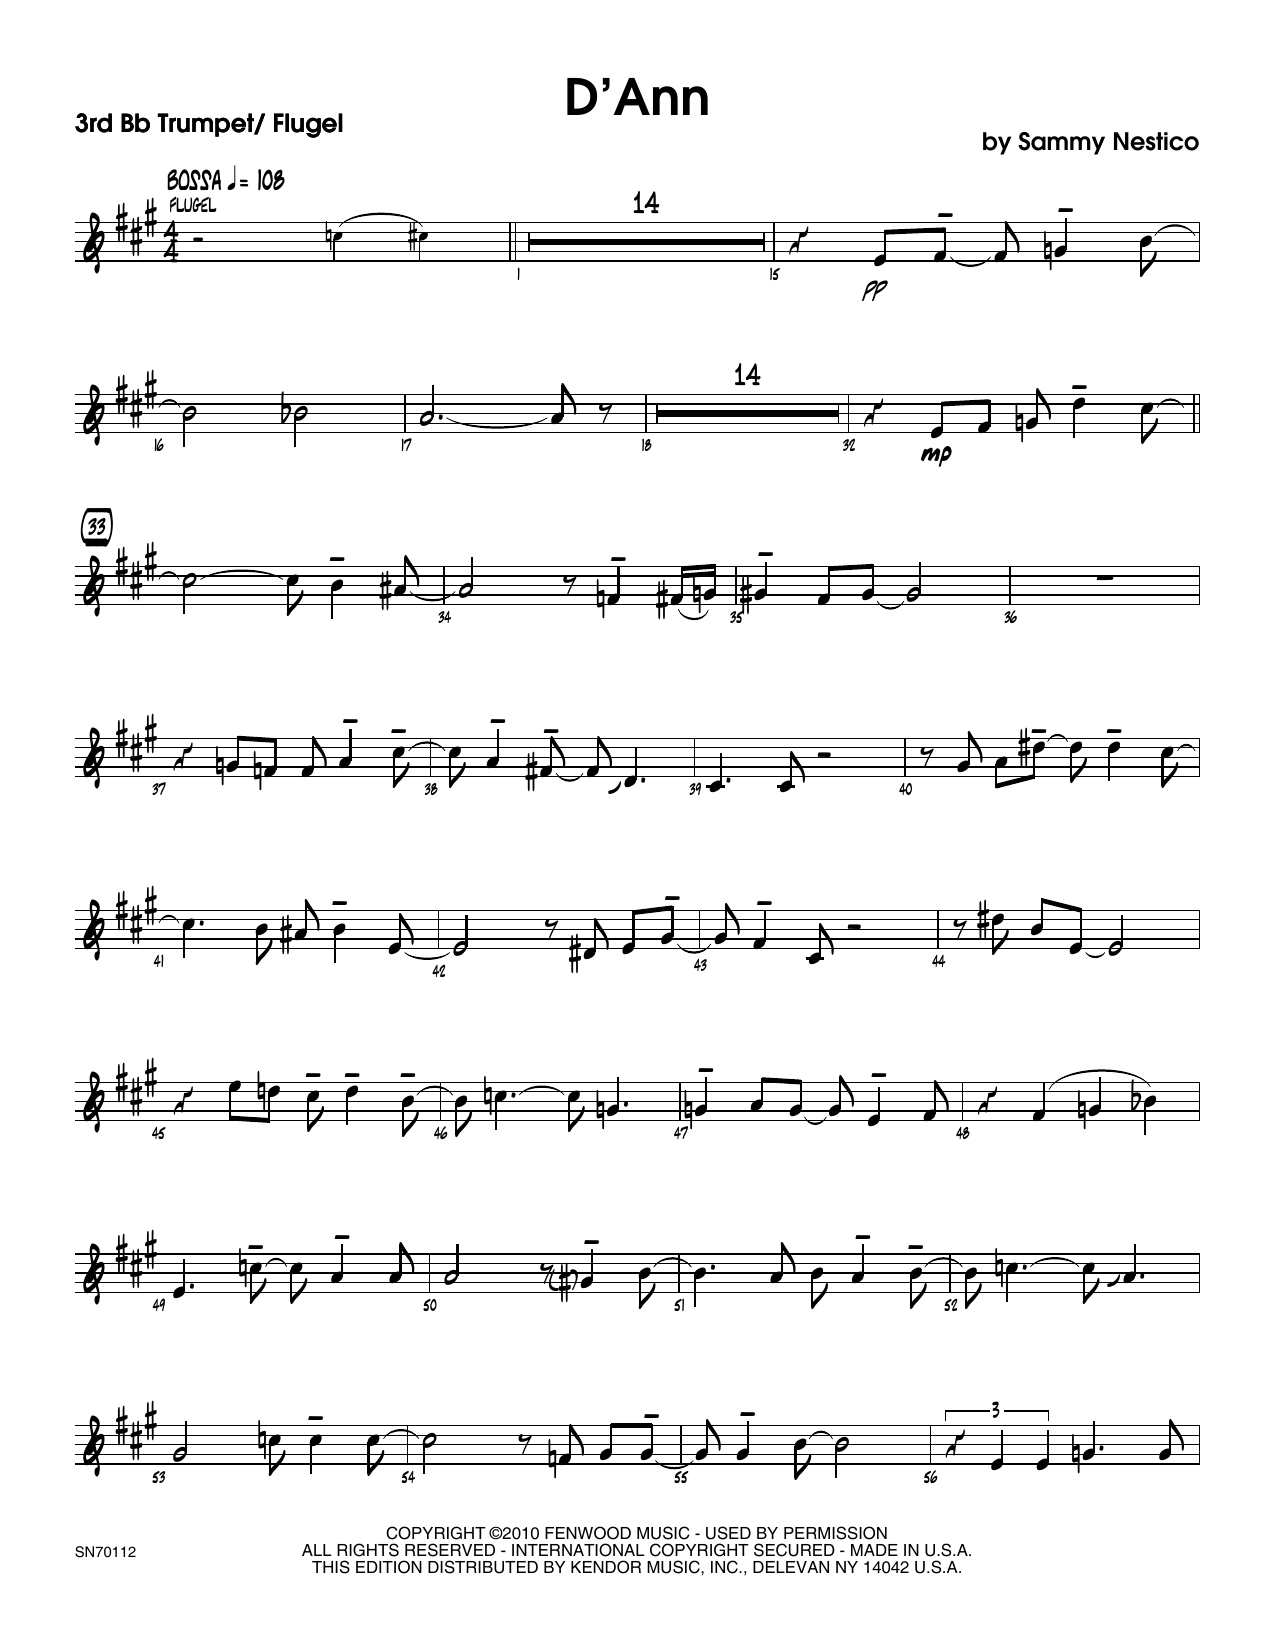 Download Sammy Nestico D'Ann - 3rd Bb Trumpet Sheet Music